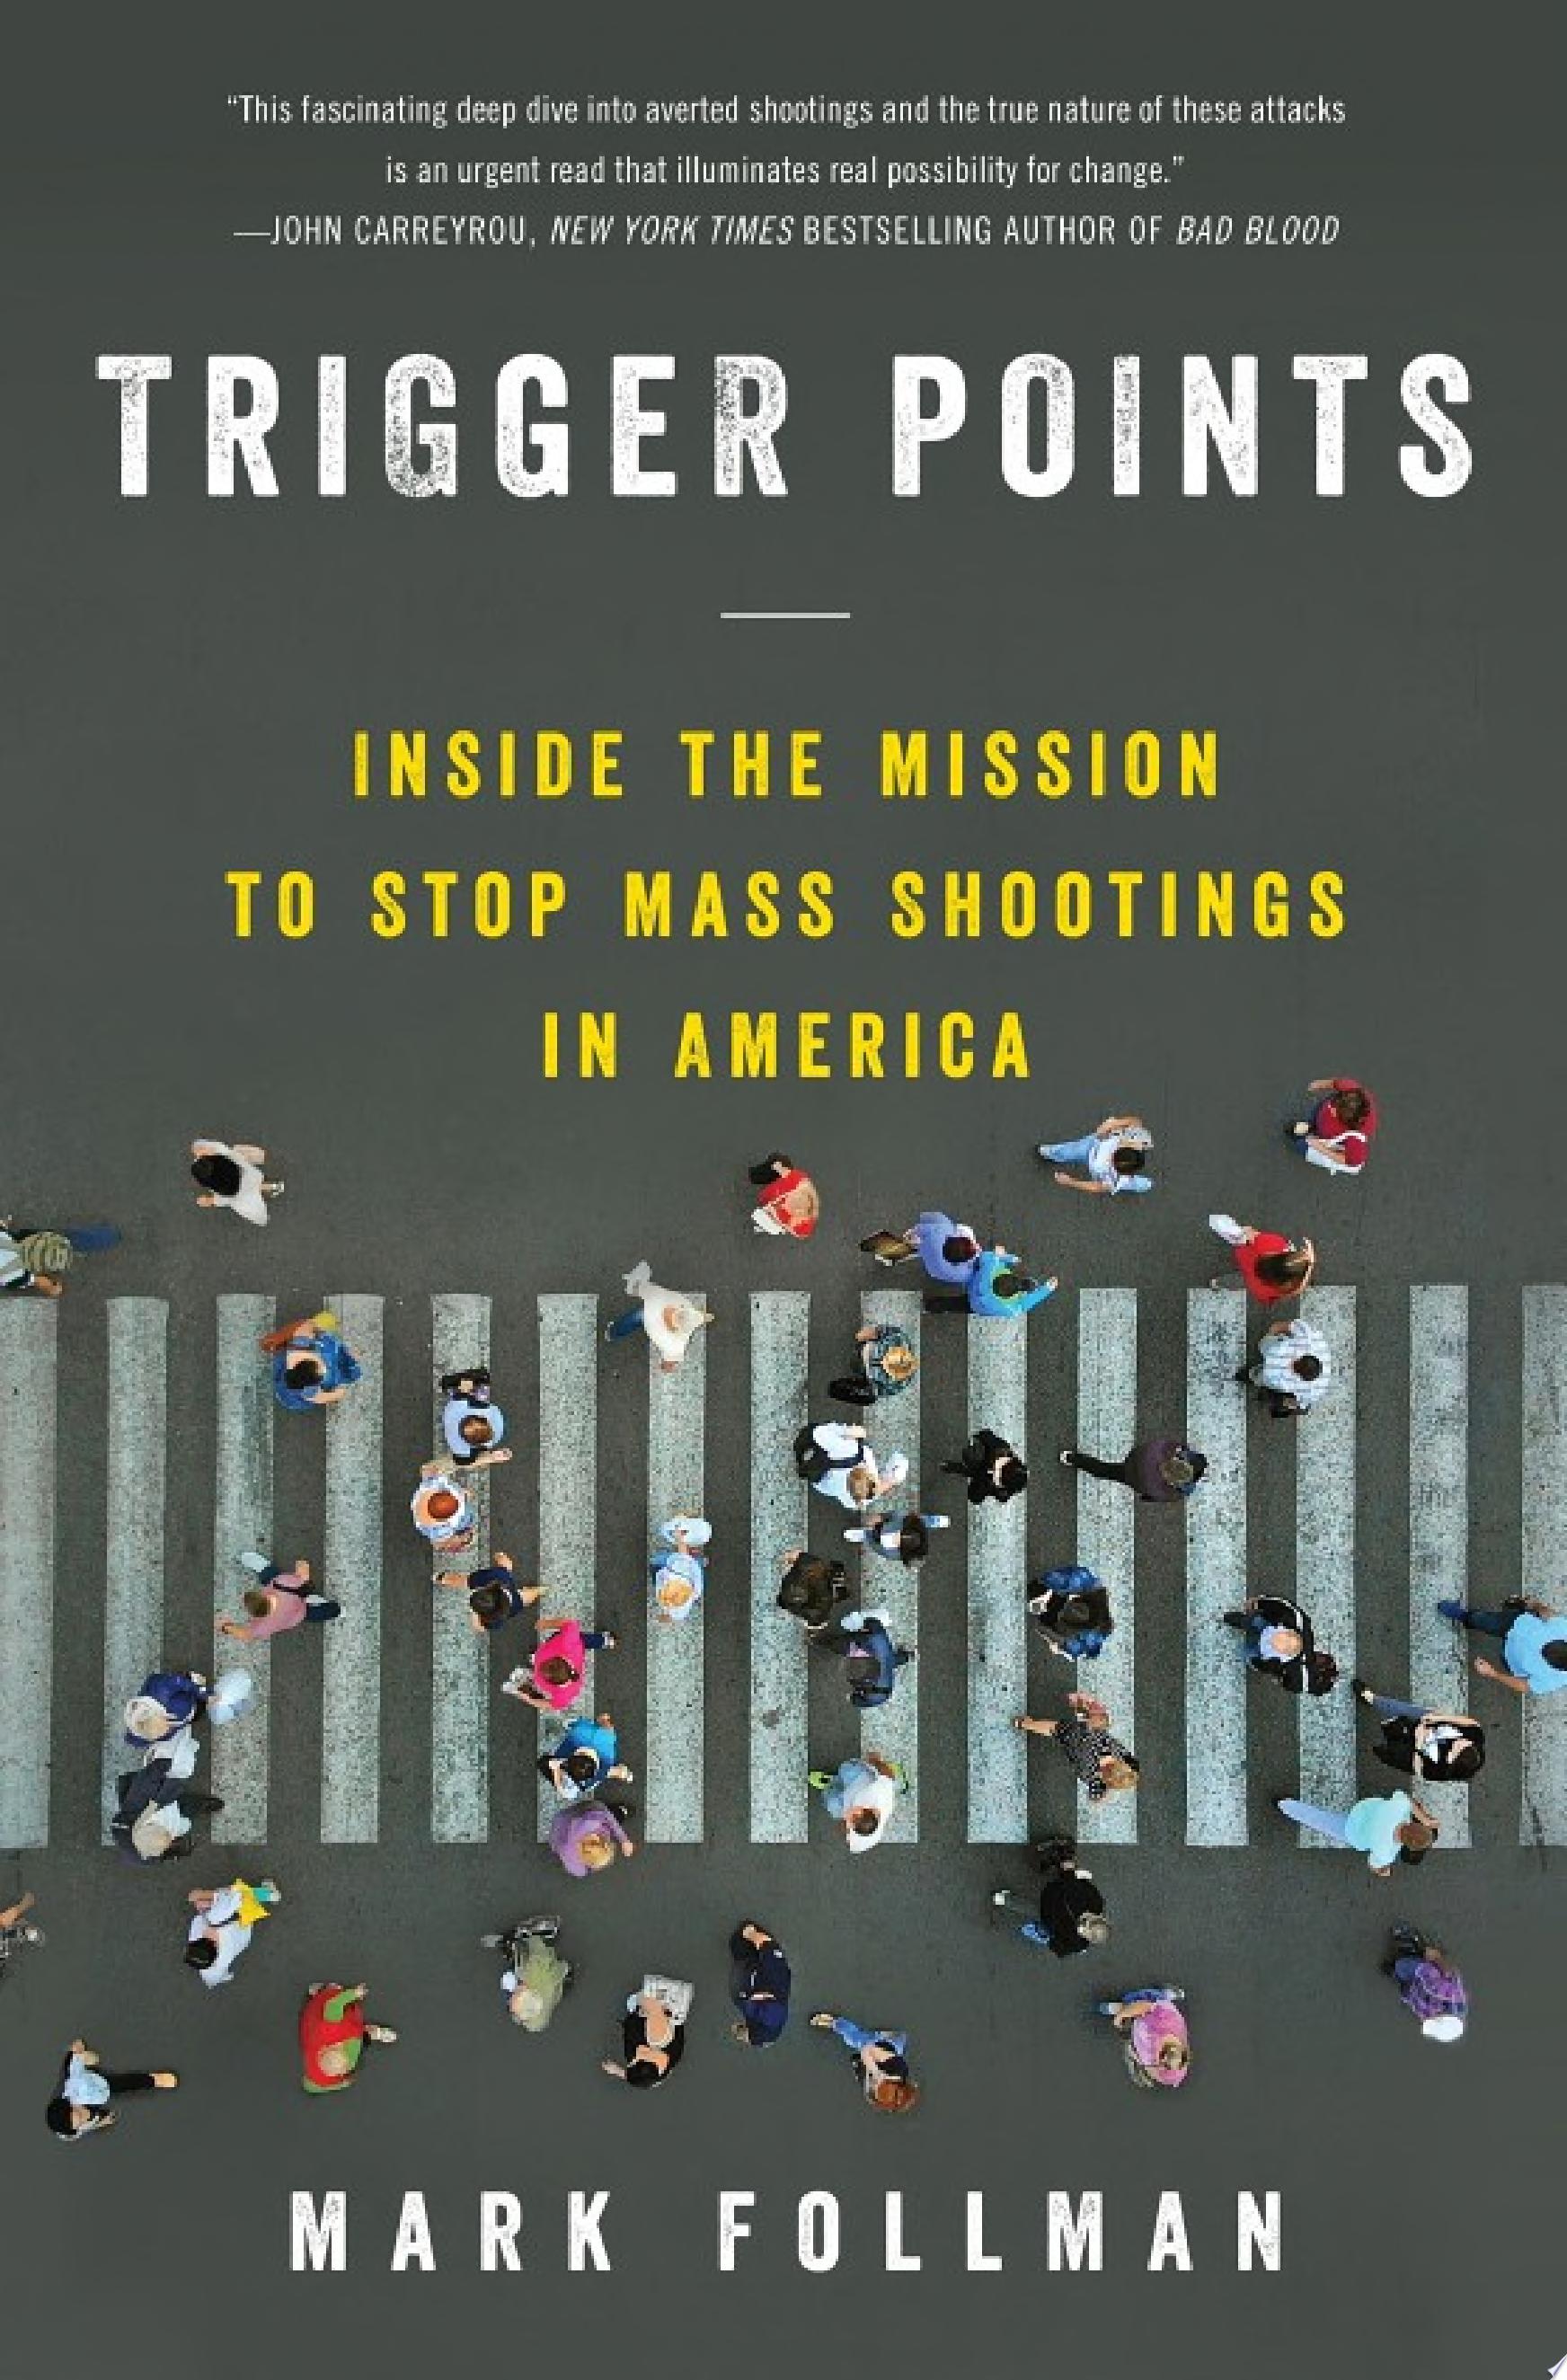 Image for "Trigger Points"